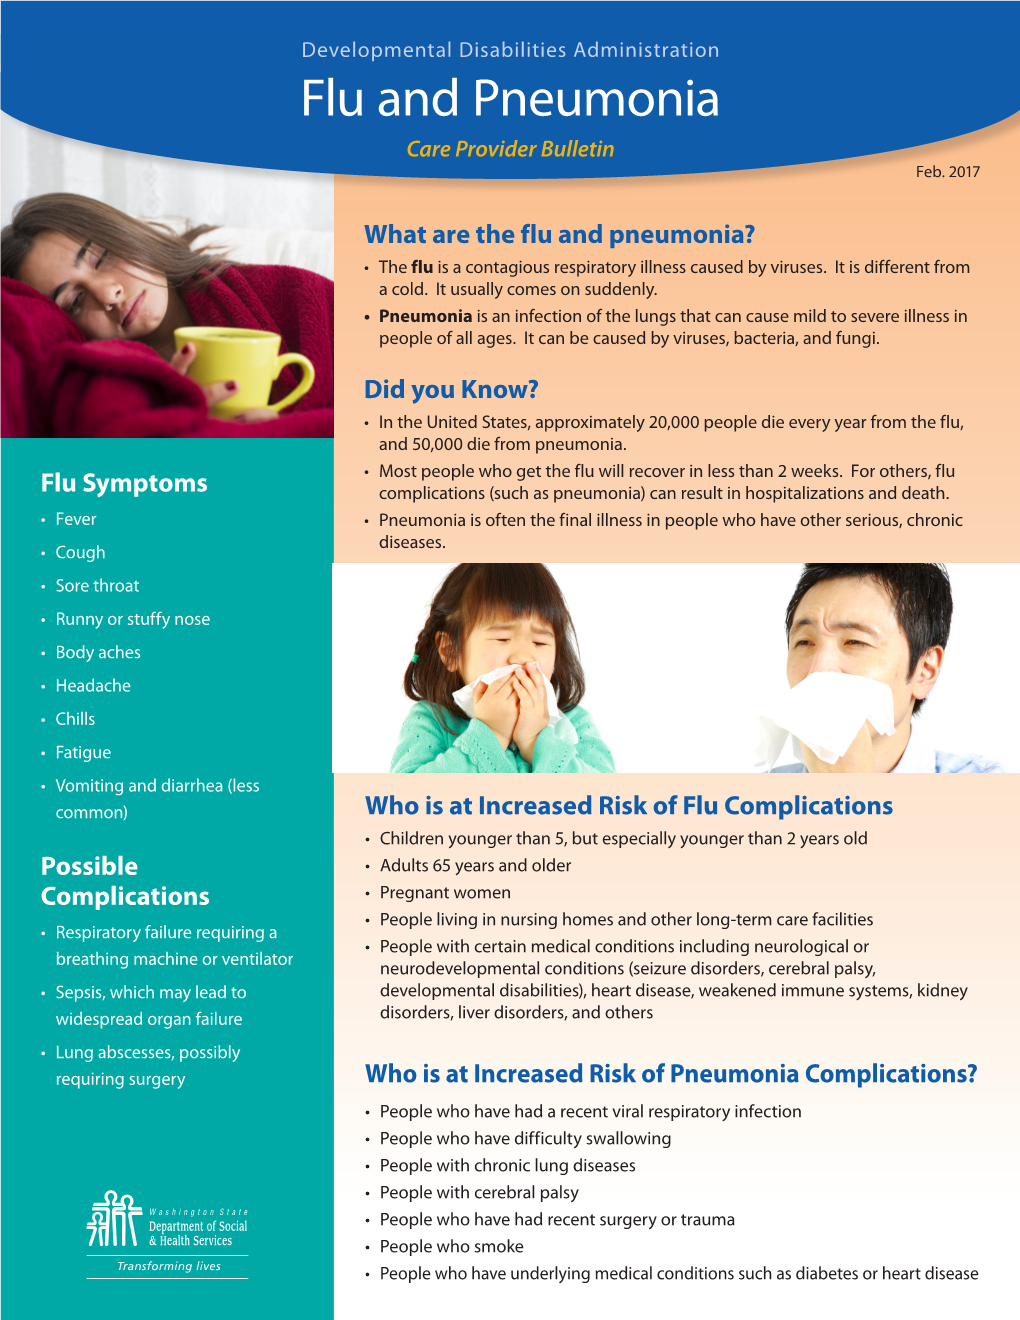 Flu and Pneumonia Care Provider Bulletin Feb